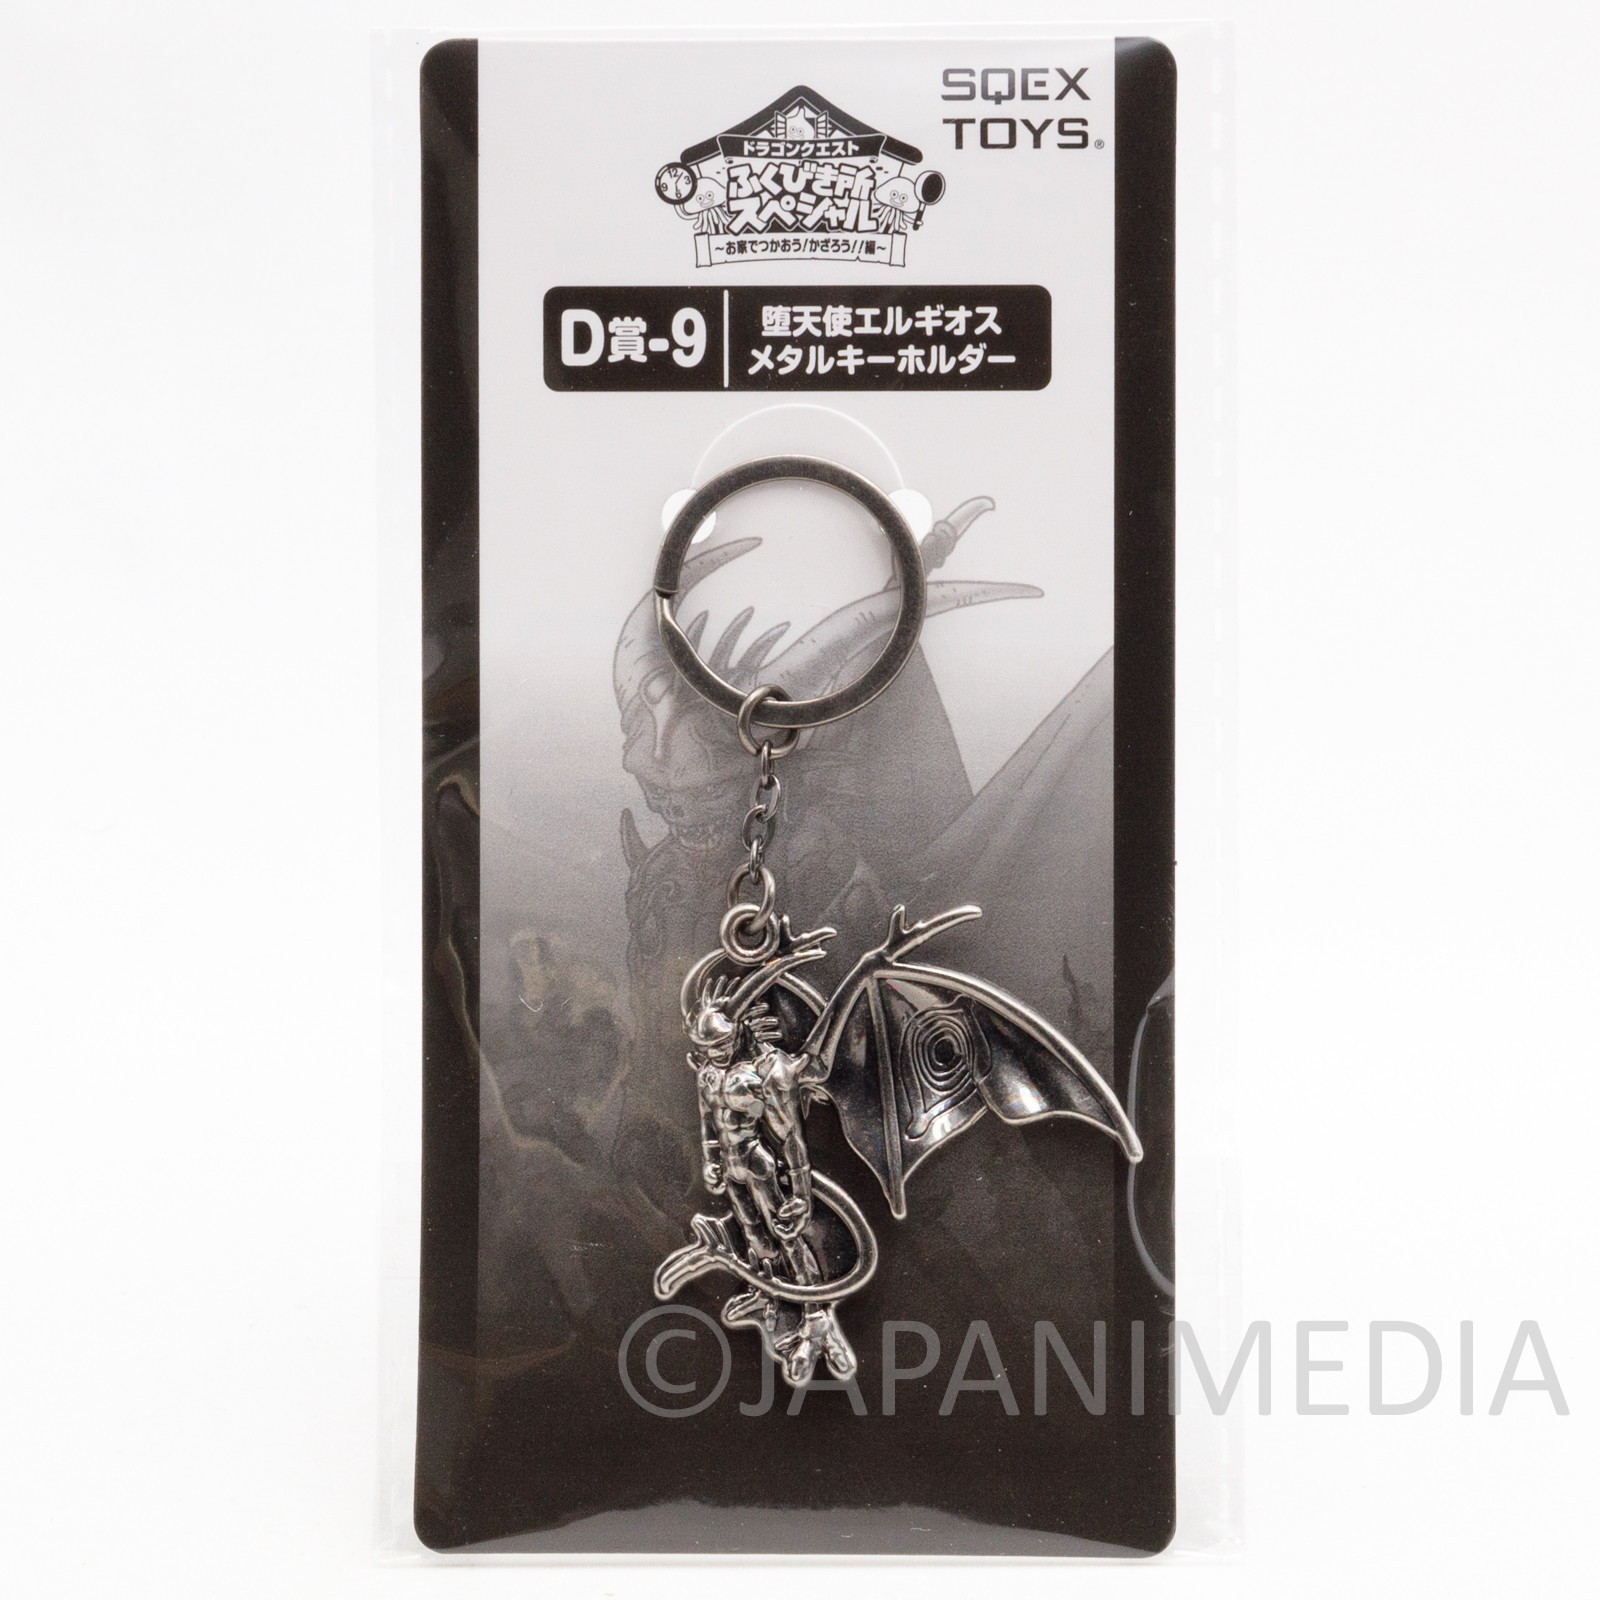 Dragon Quest Metal Charm Keychain Corvus SQEX TOYS JAPAN WARRIOR